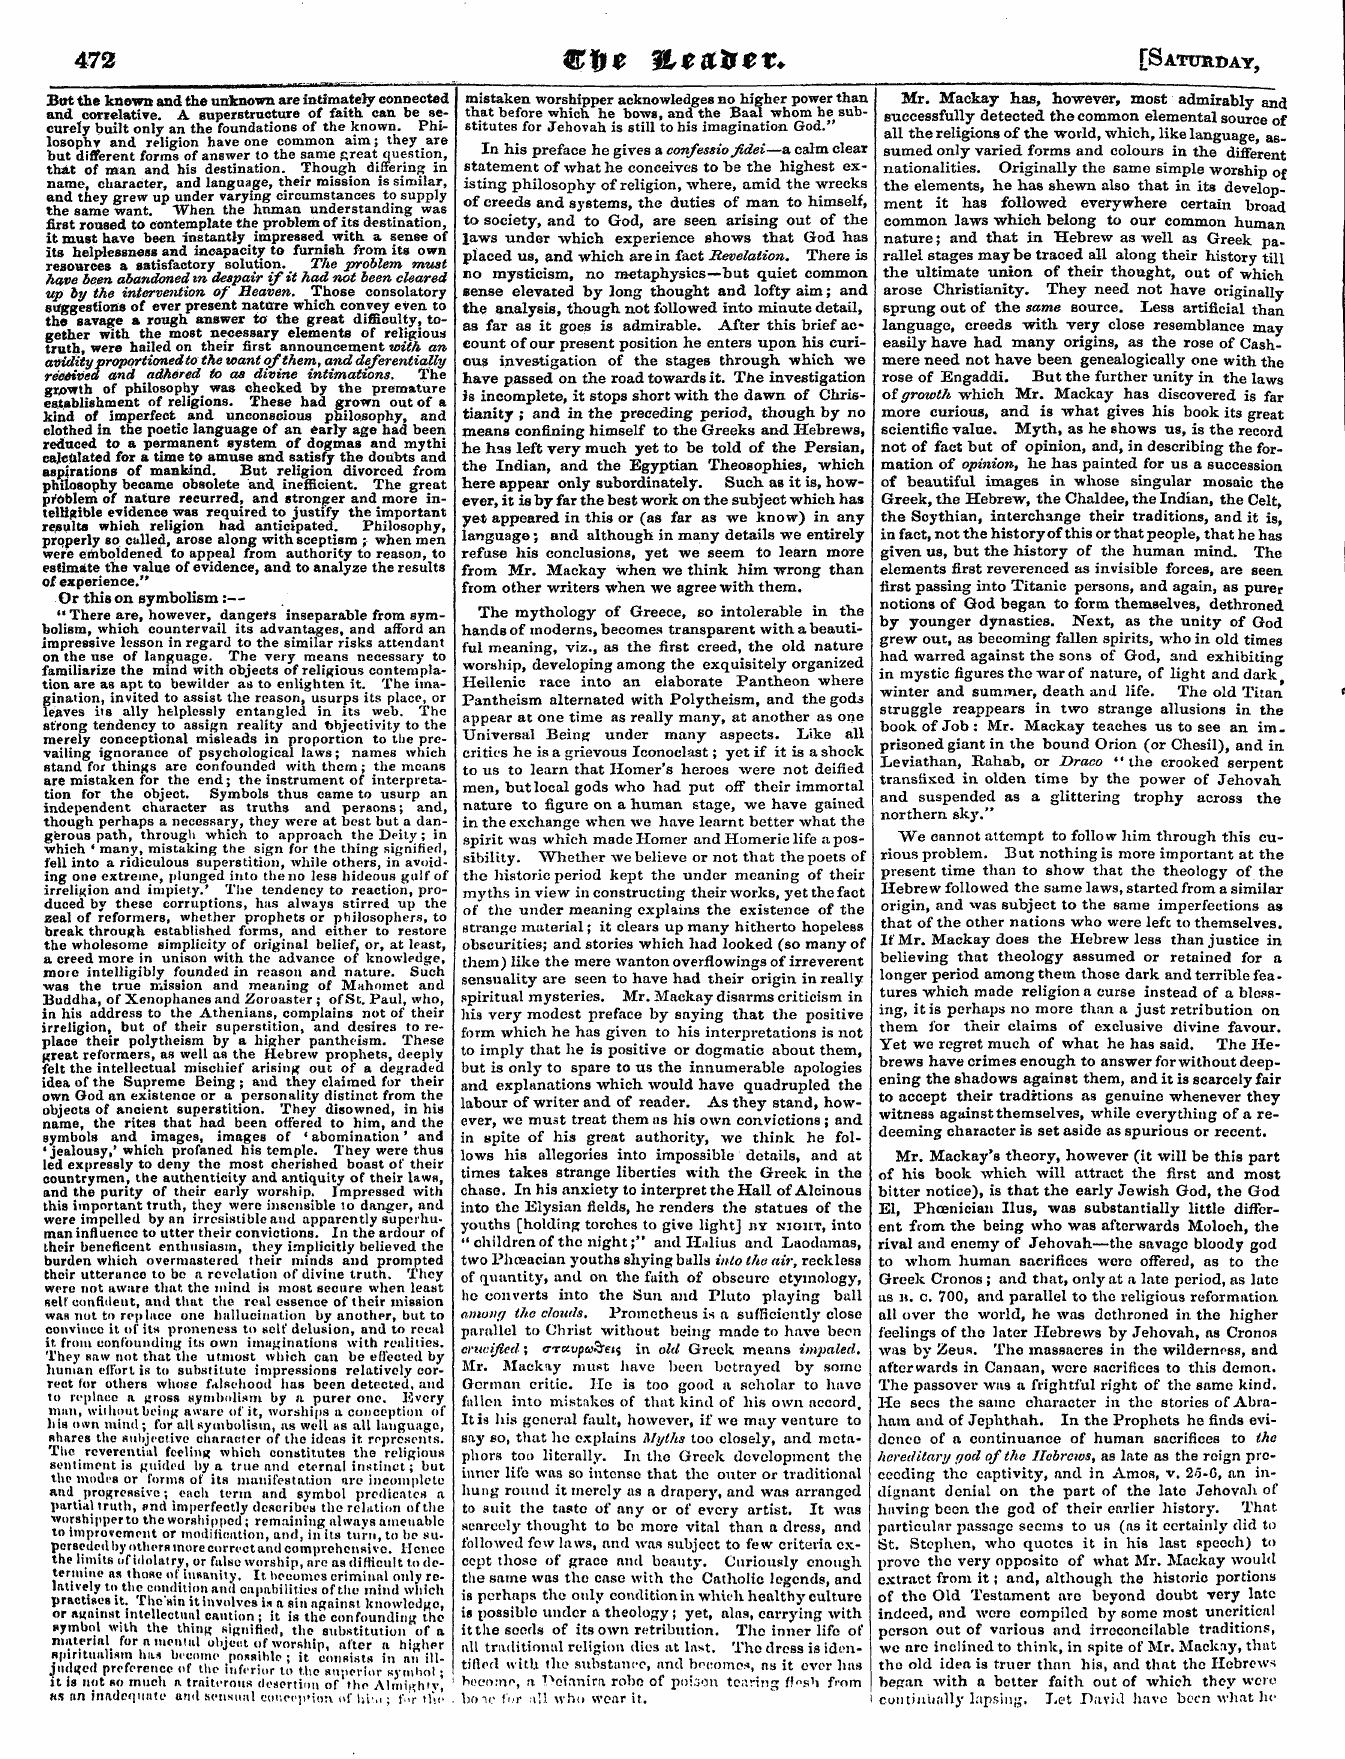 Leader (1850-1860): jS F Y, Country edition - 472 &I)V Iltahet. [Saturday,